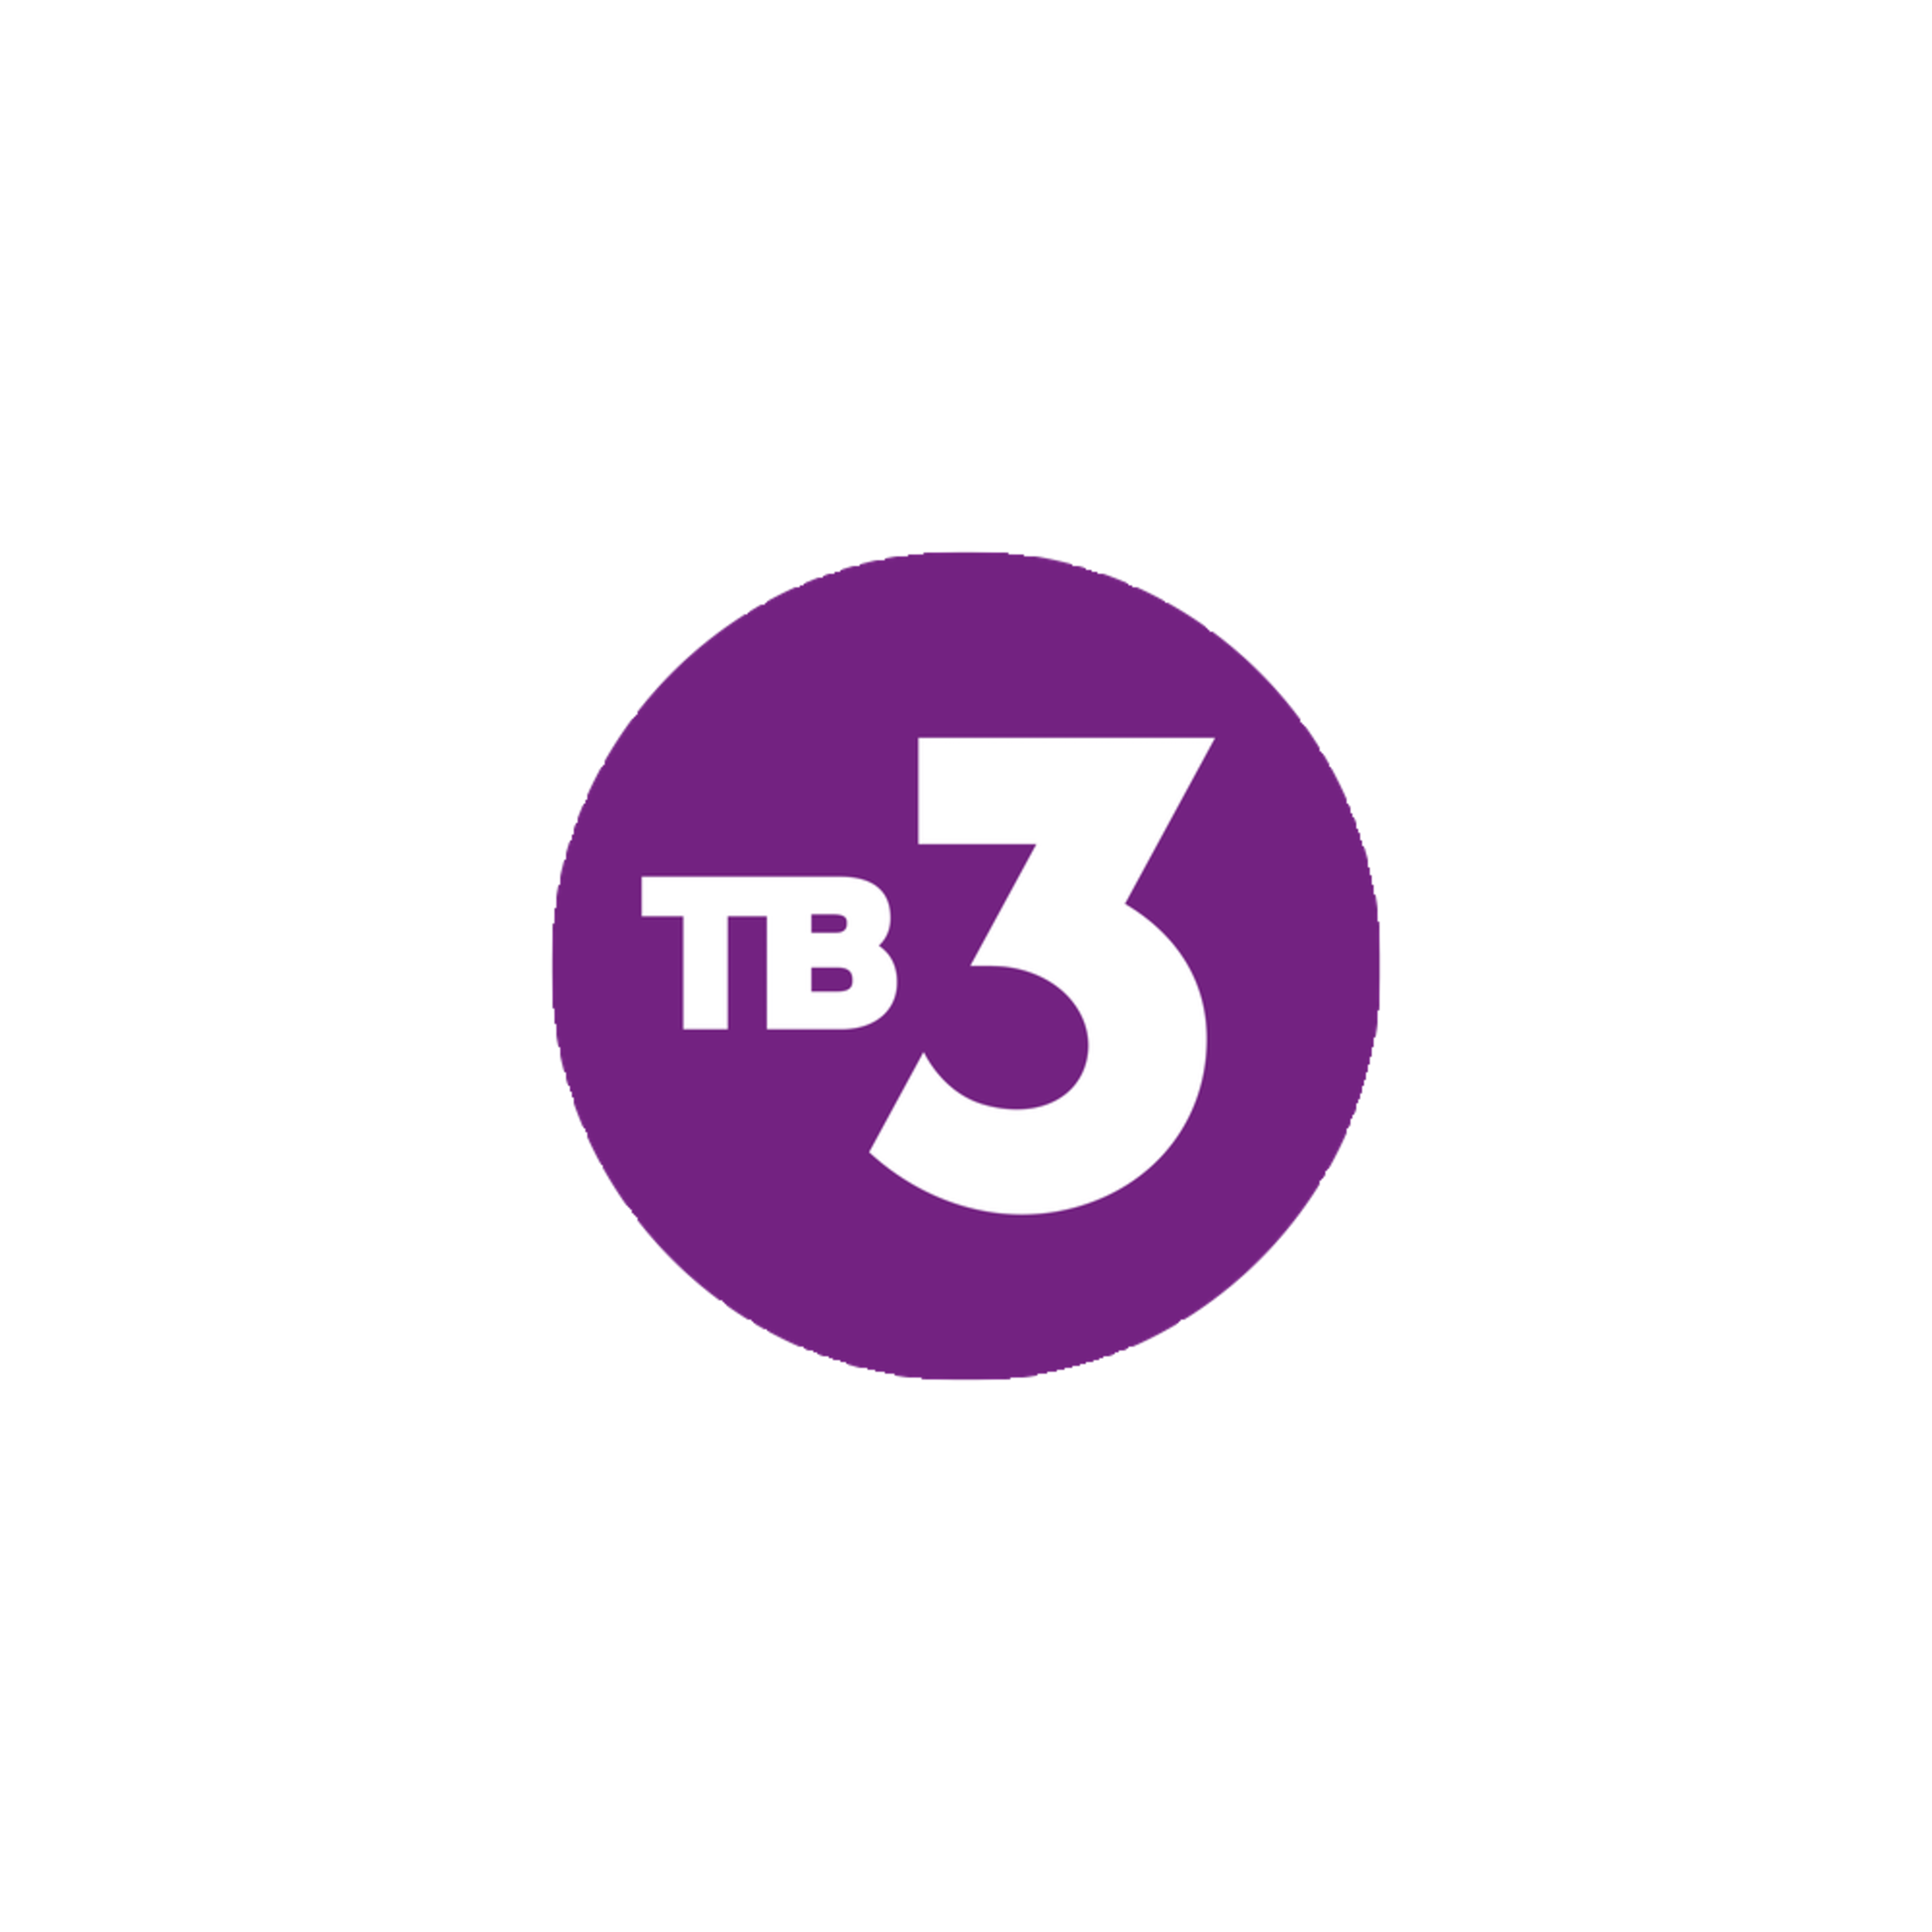 Tv3 3. Тв3 логотип. Телеканал тв3. Логотип канала тв3. 3 Канал.